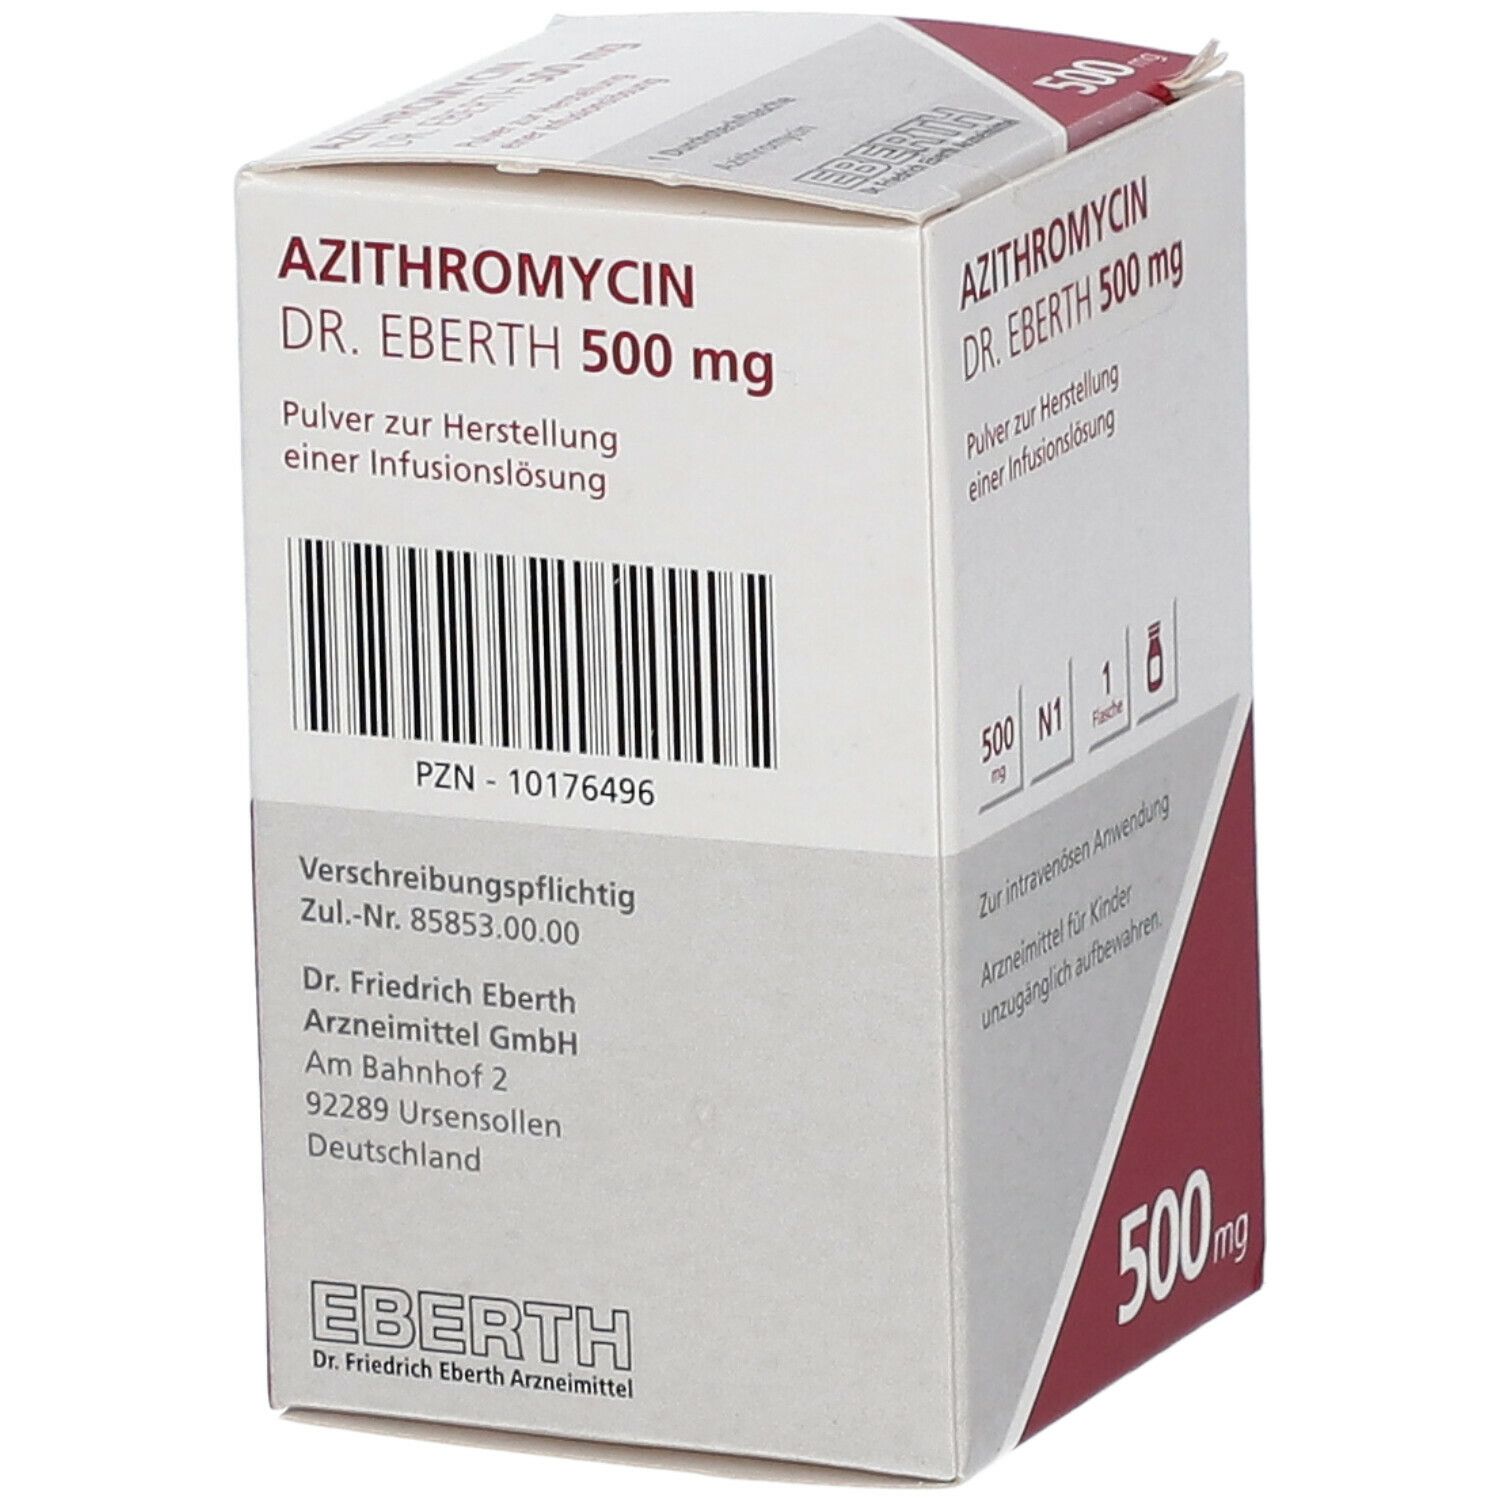 AZITHROMYCIN DR. EBERTH 500 mg